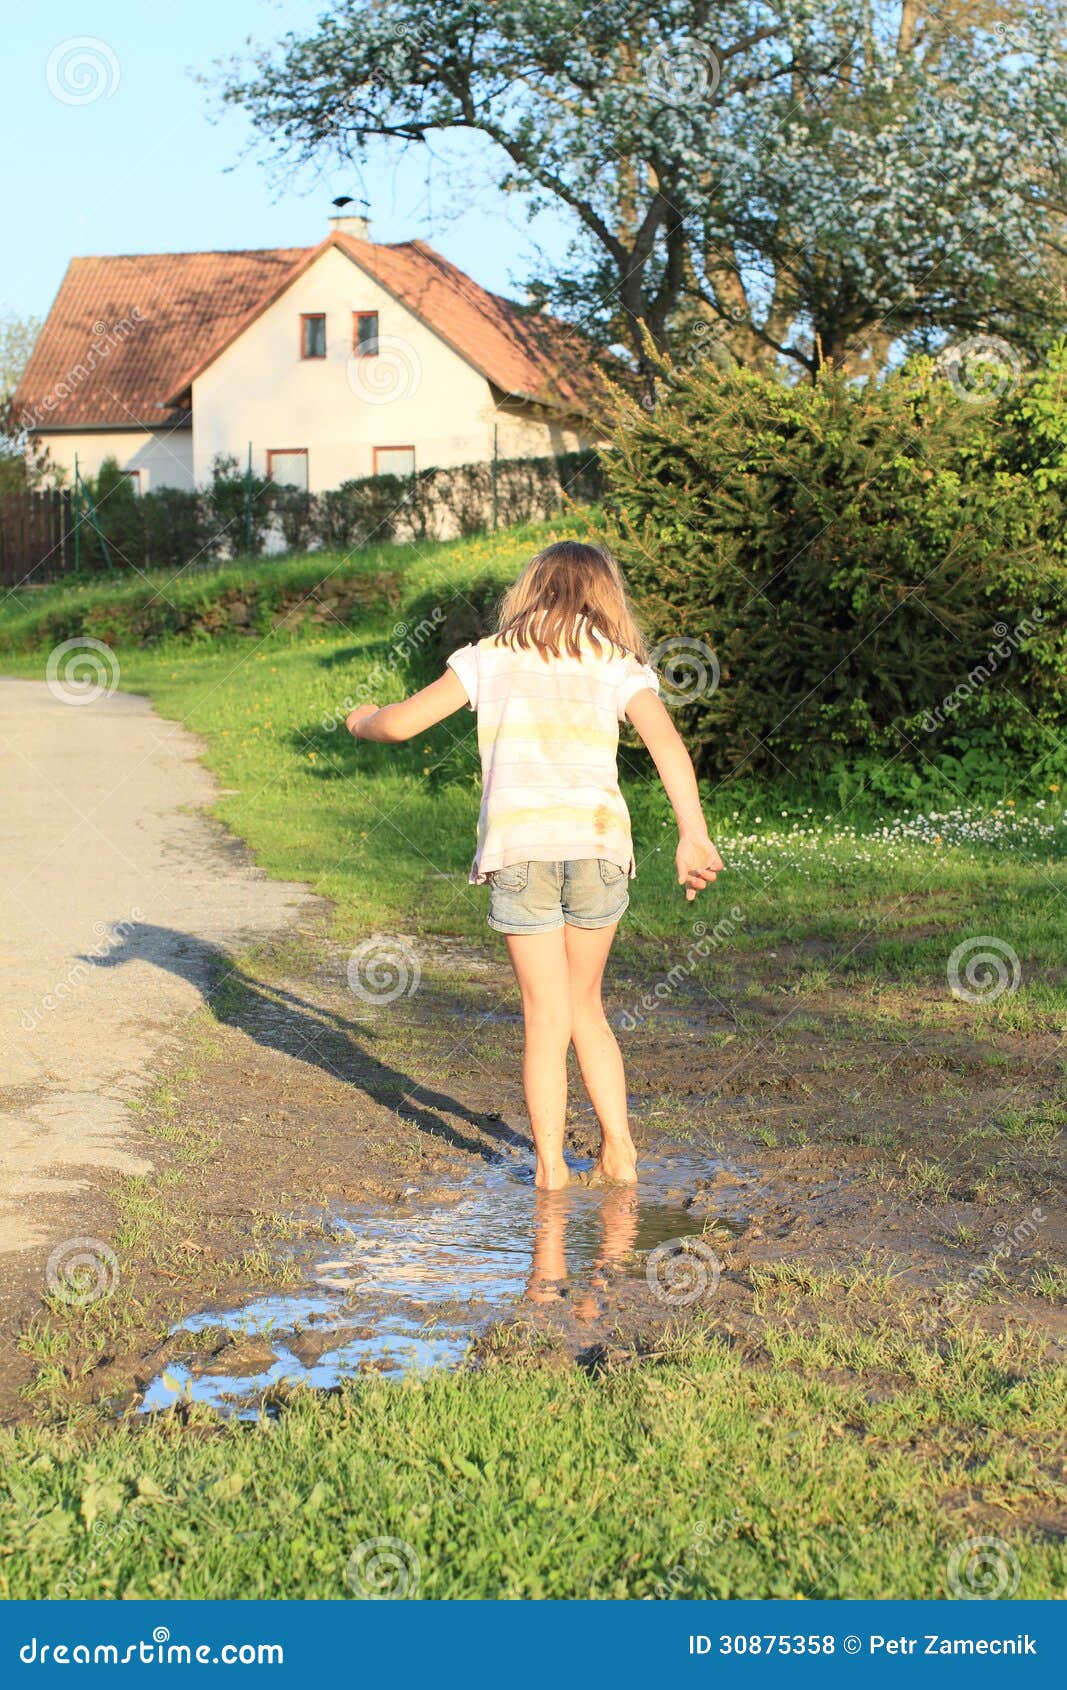 https://thumbs.dreamstime.com/z/little-girl-muddy-puddle-barefoot-walking-mud-30875358.jpg